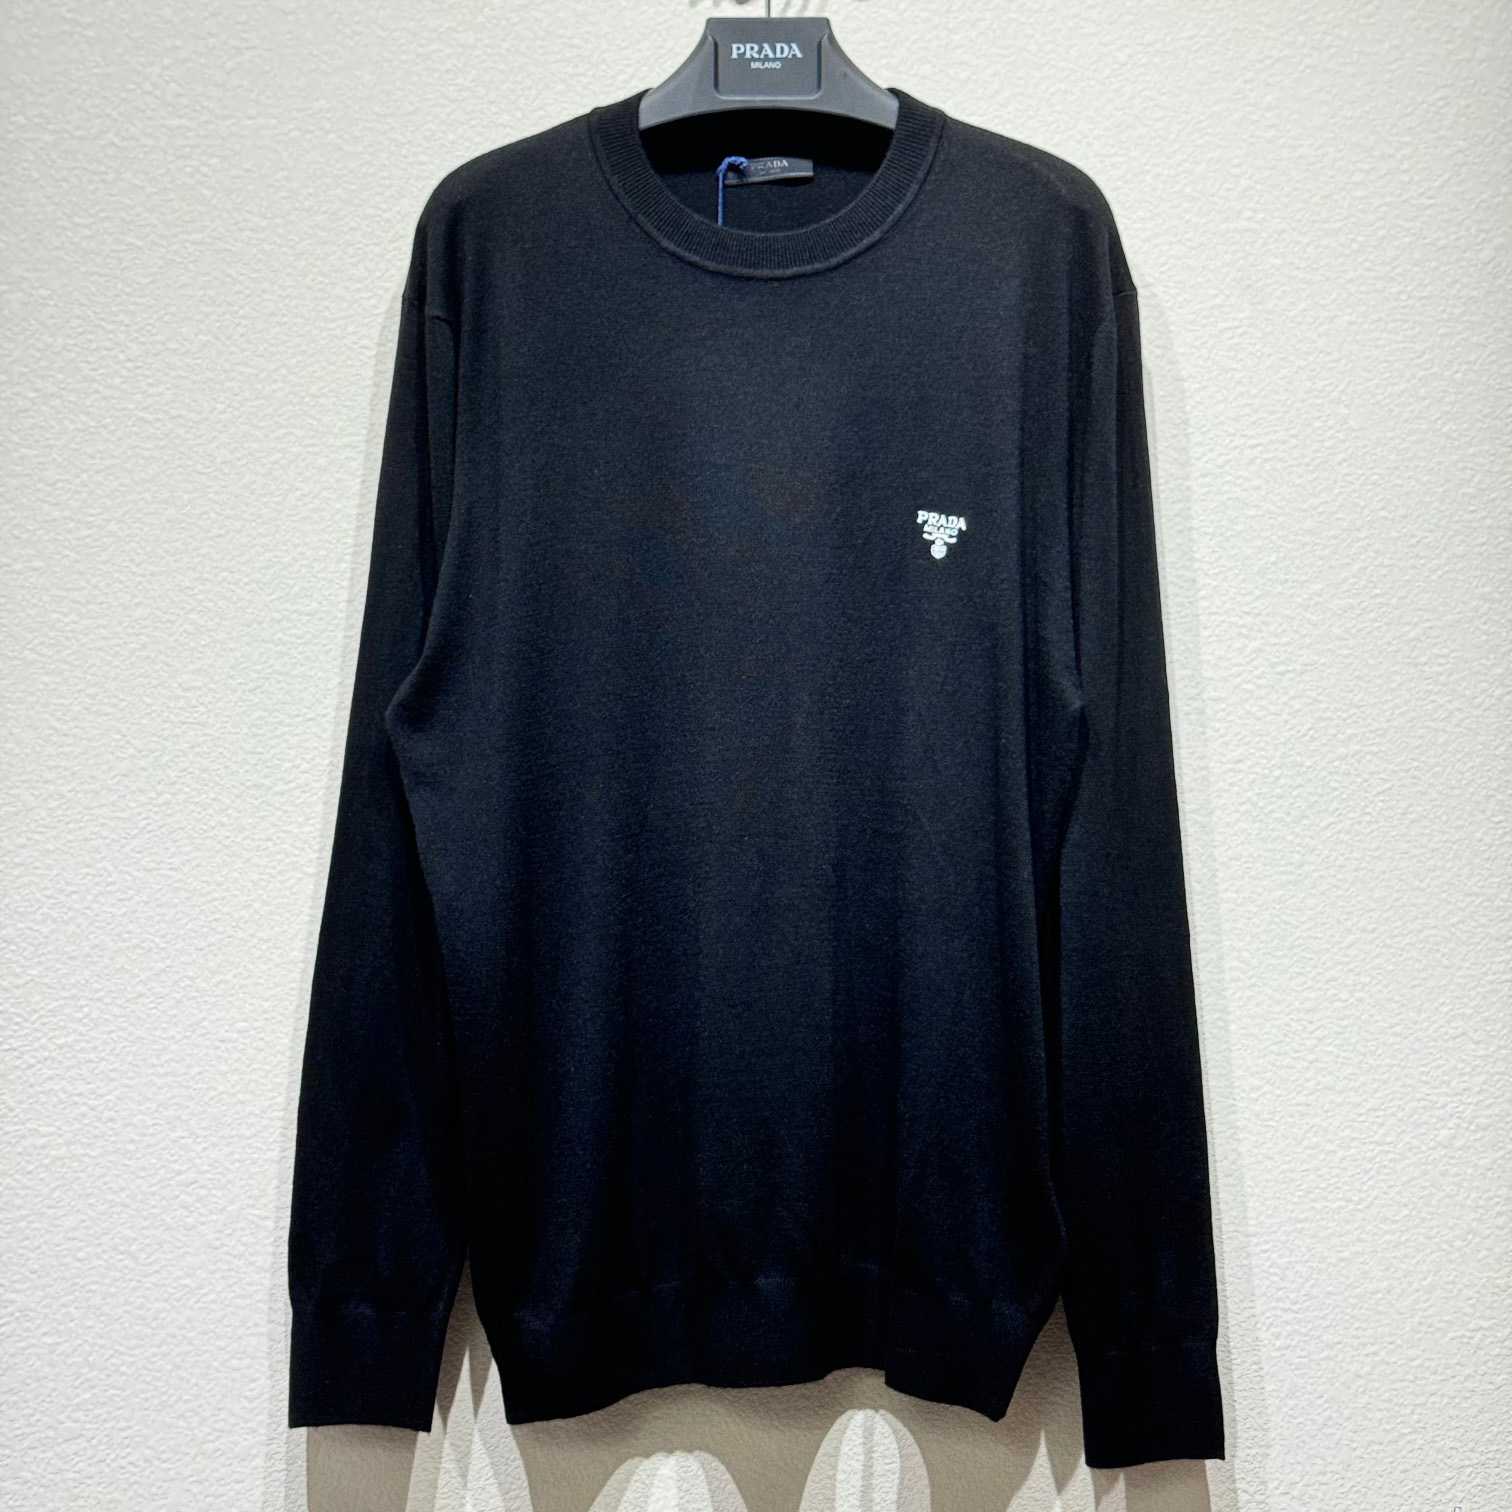 Prada Cashmere Sweater - everydesigner